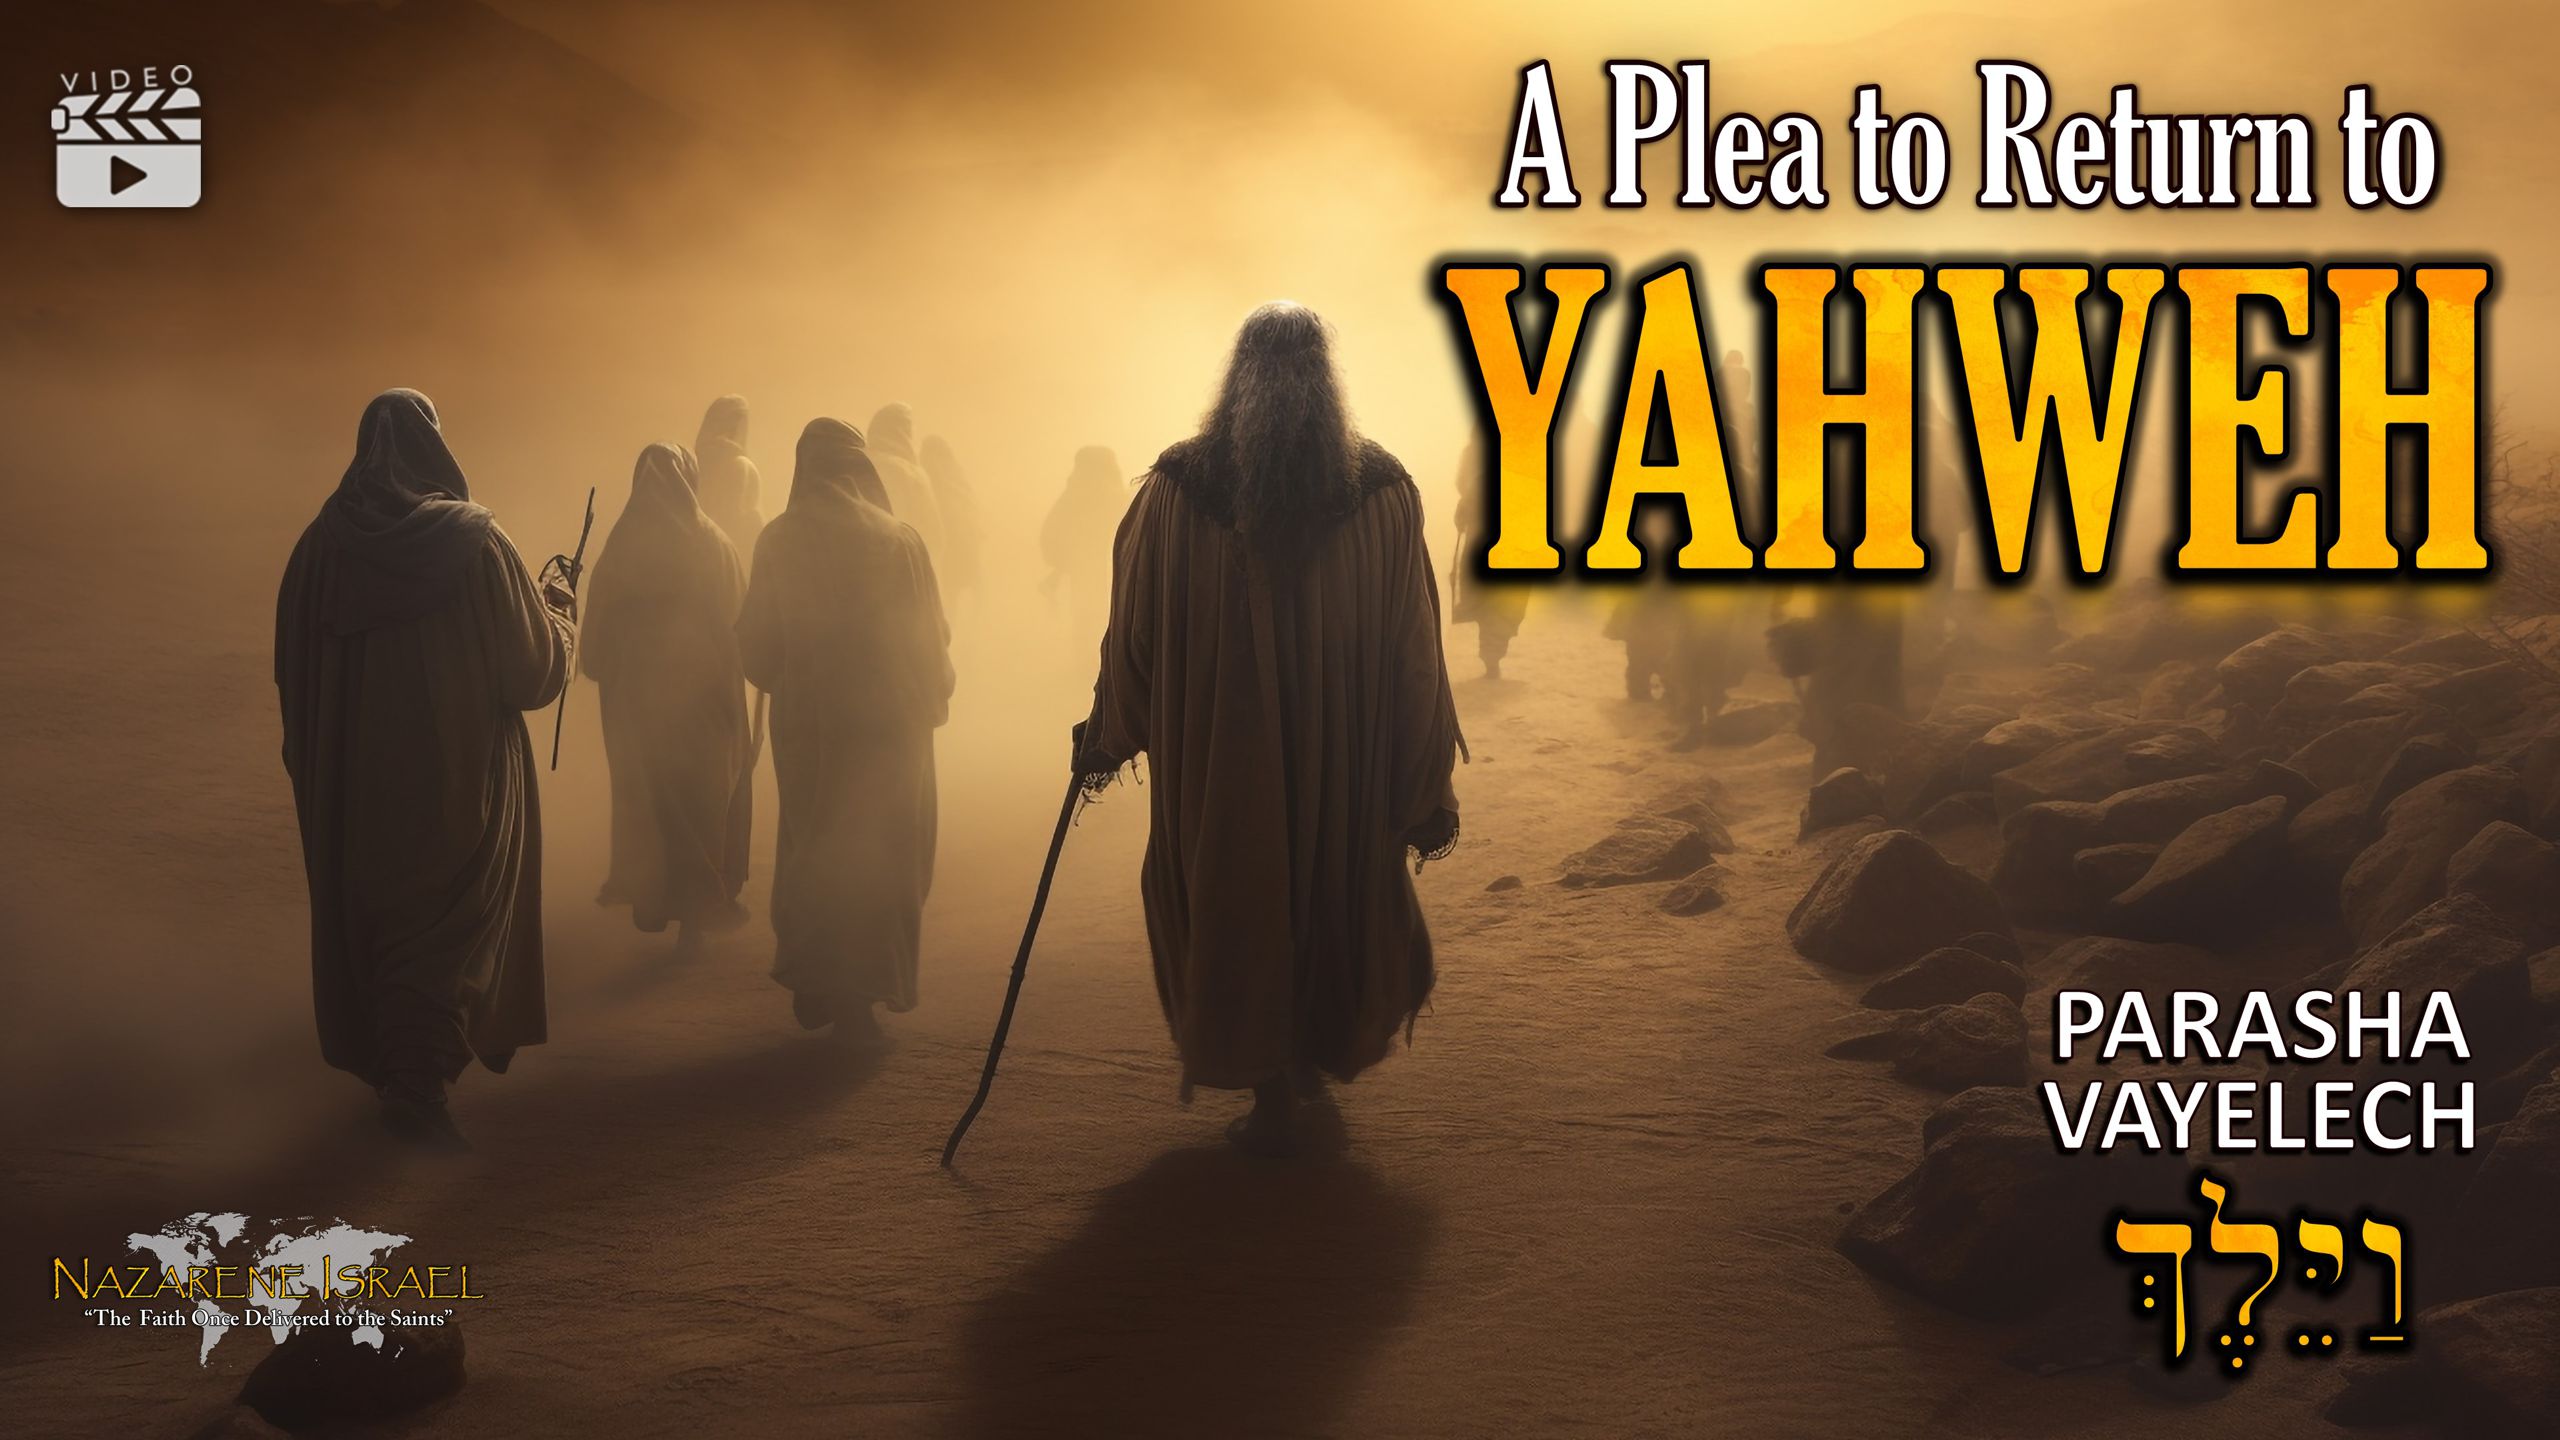 Parasha Vayelech – A Plea to Return to Yahweh